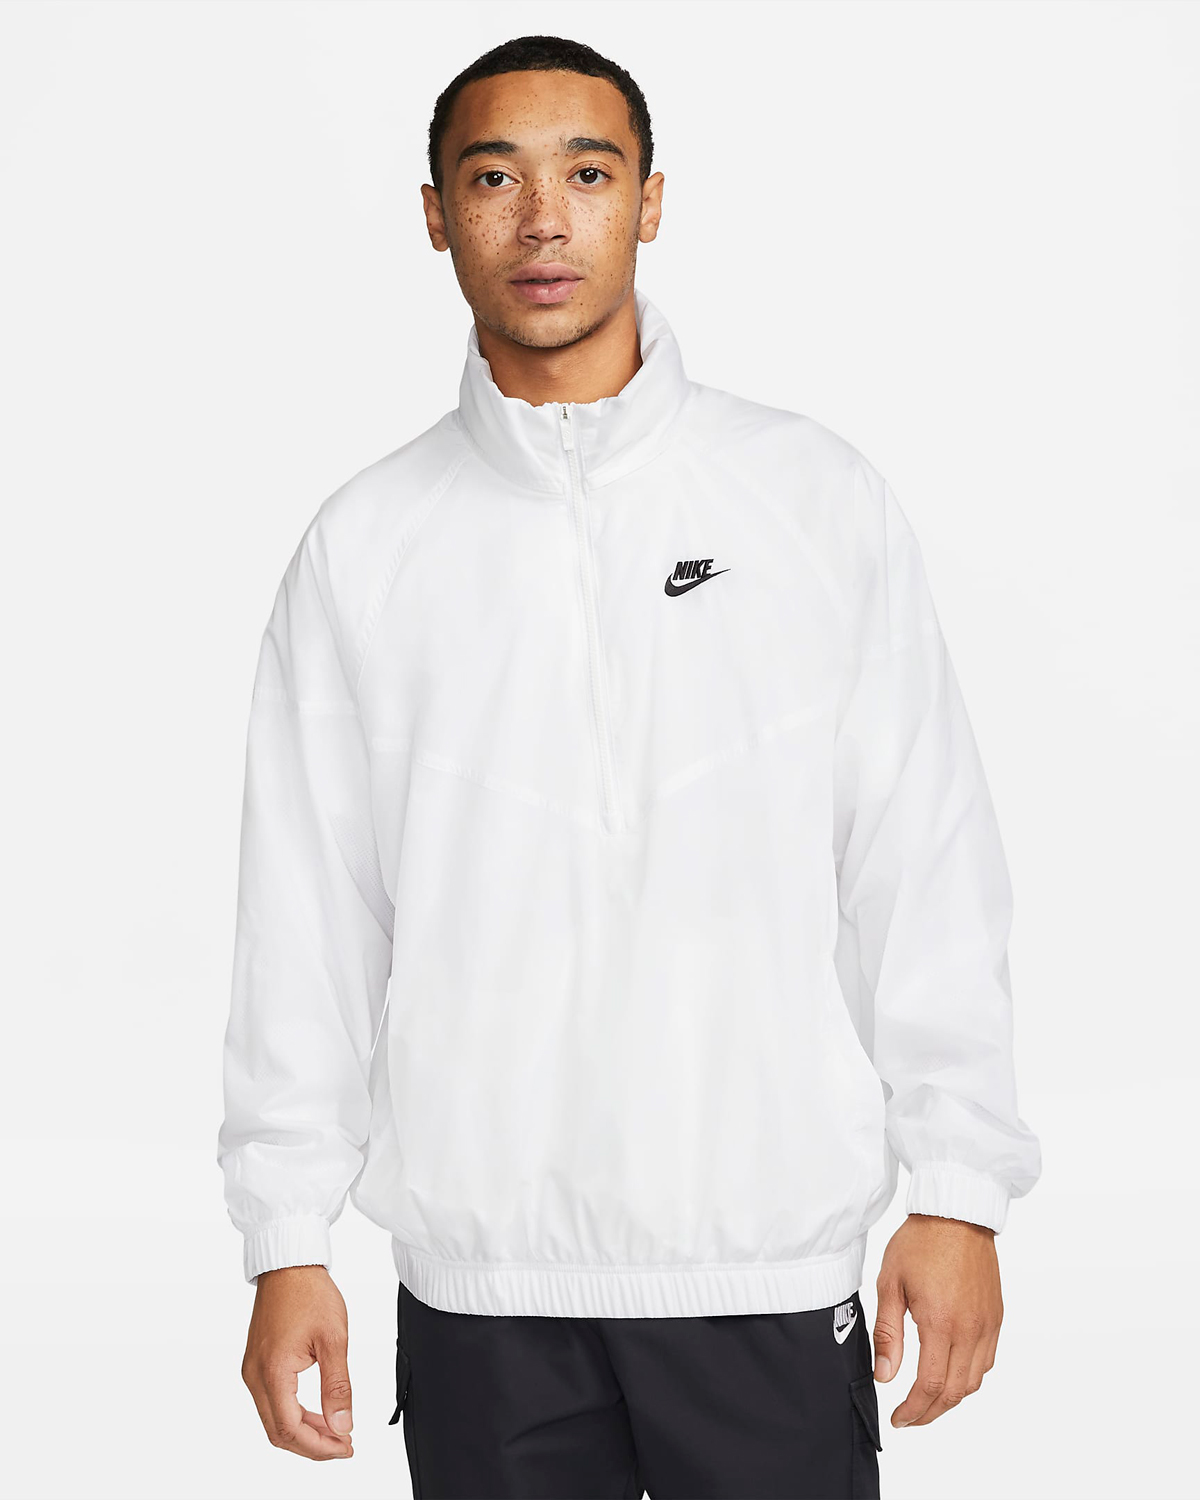 Nike-Sportswear-Windrunner-Woven-Jacket-White-Black